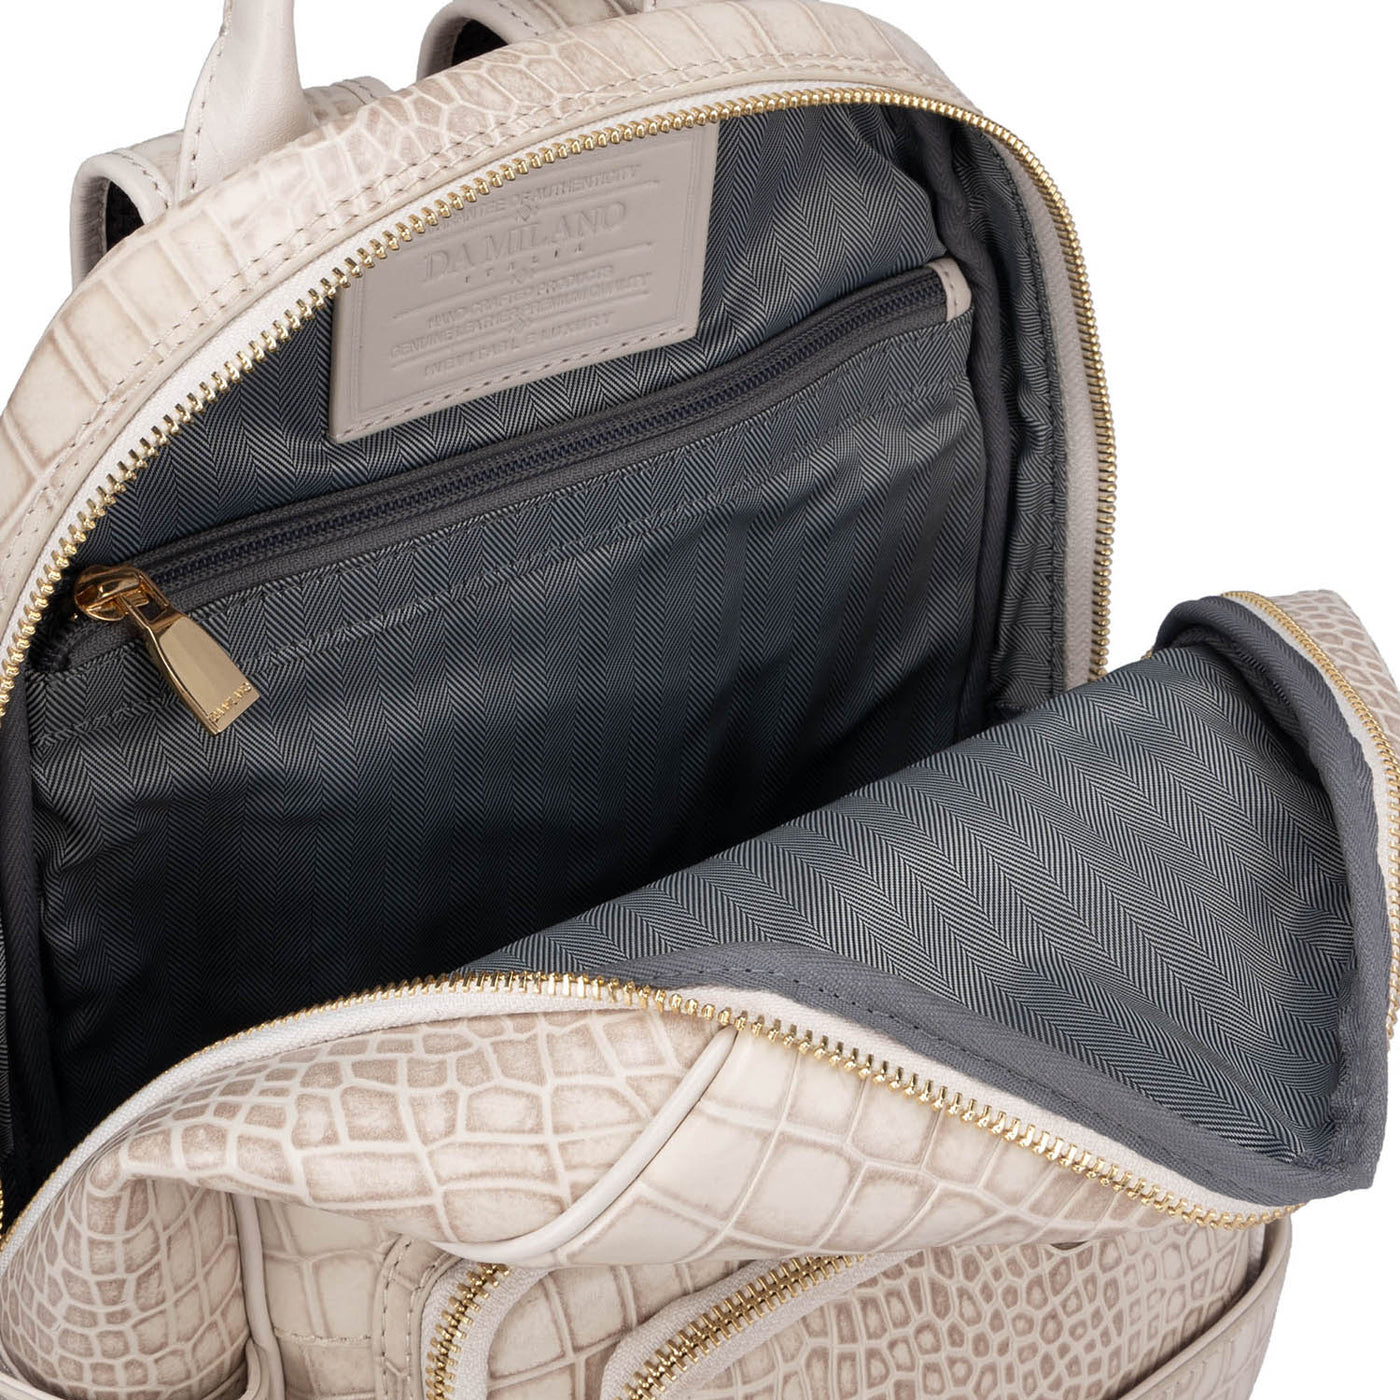 Croco Leather Backpack - Cream